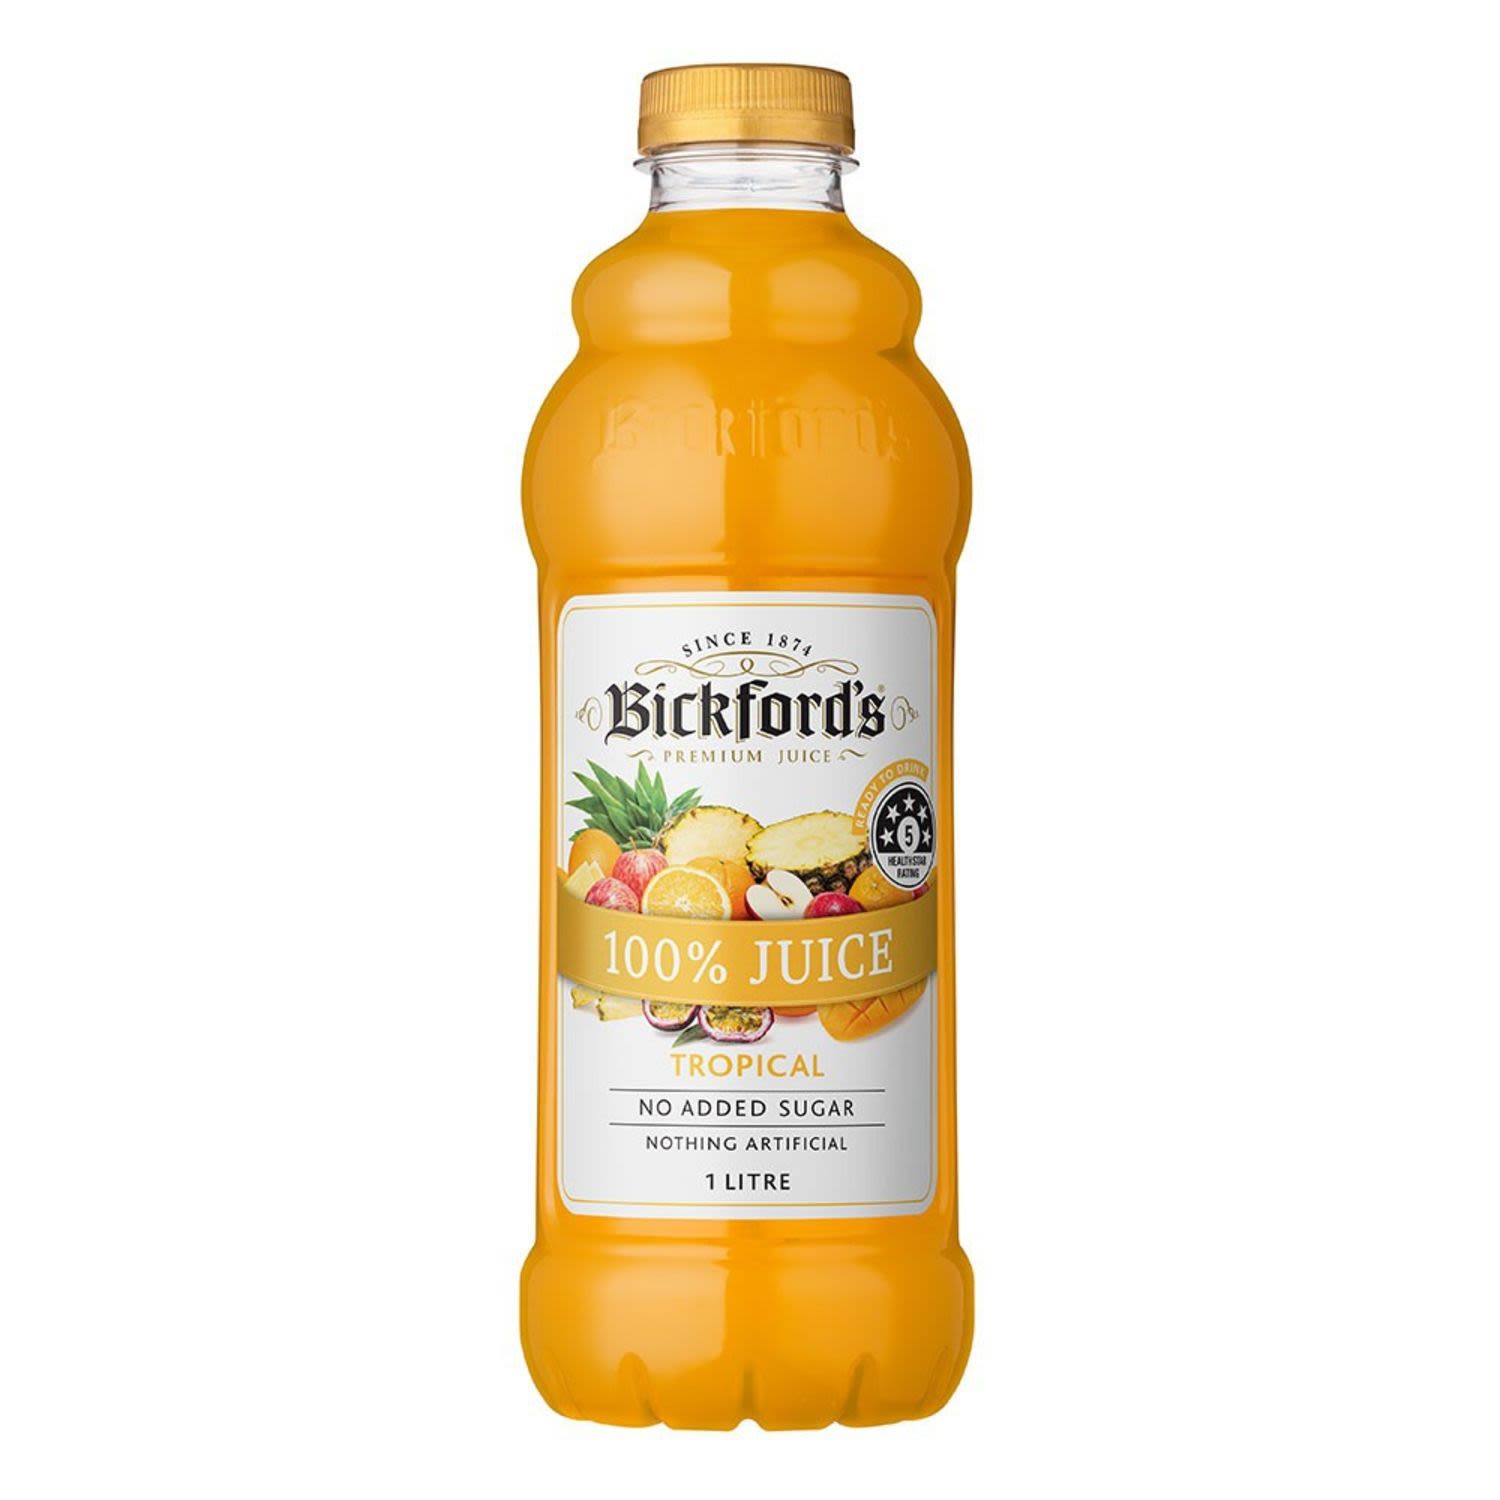 Bickford's Tropical Juice, 1 Litre